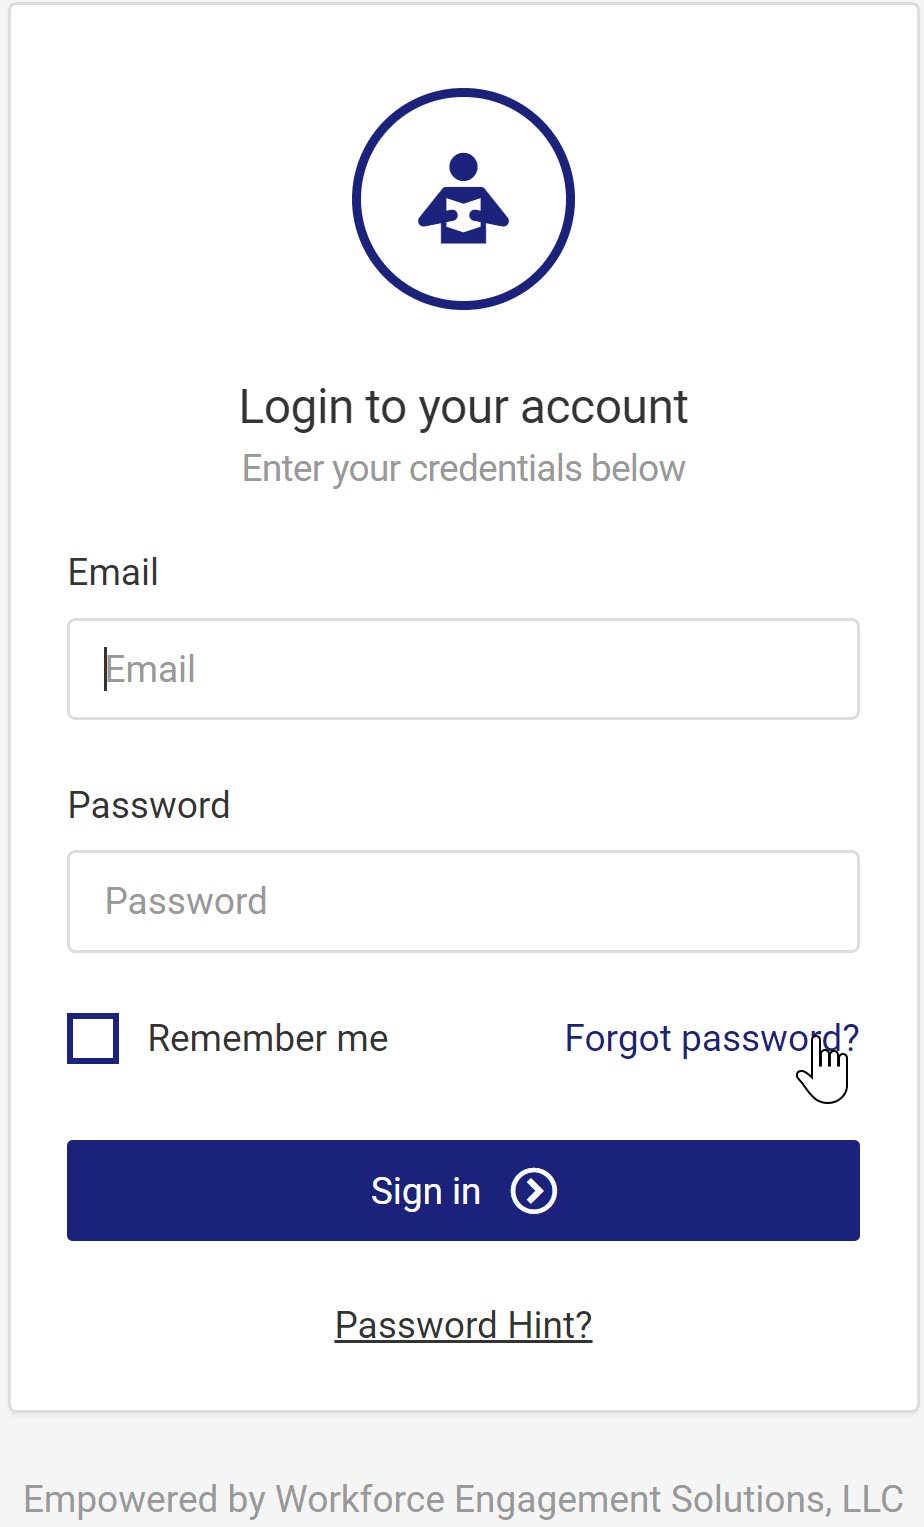 Forgot Password Link